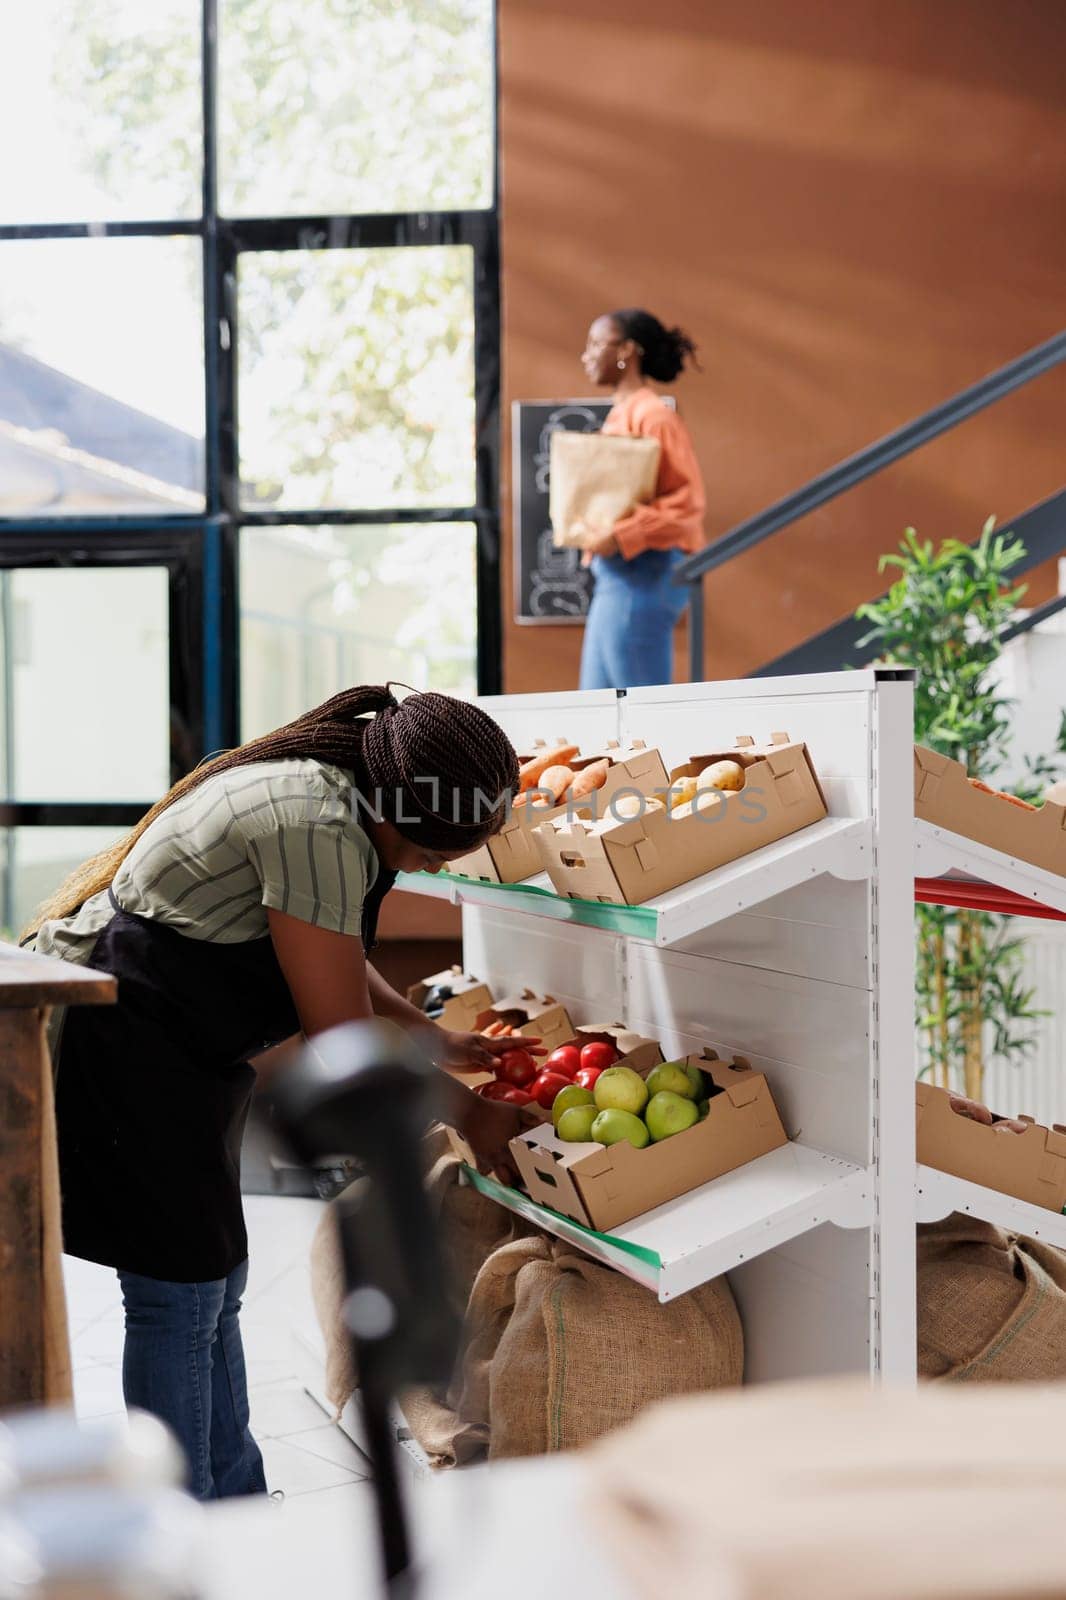 Vendor inspecting homegrown produce by DCStudio